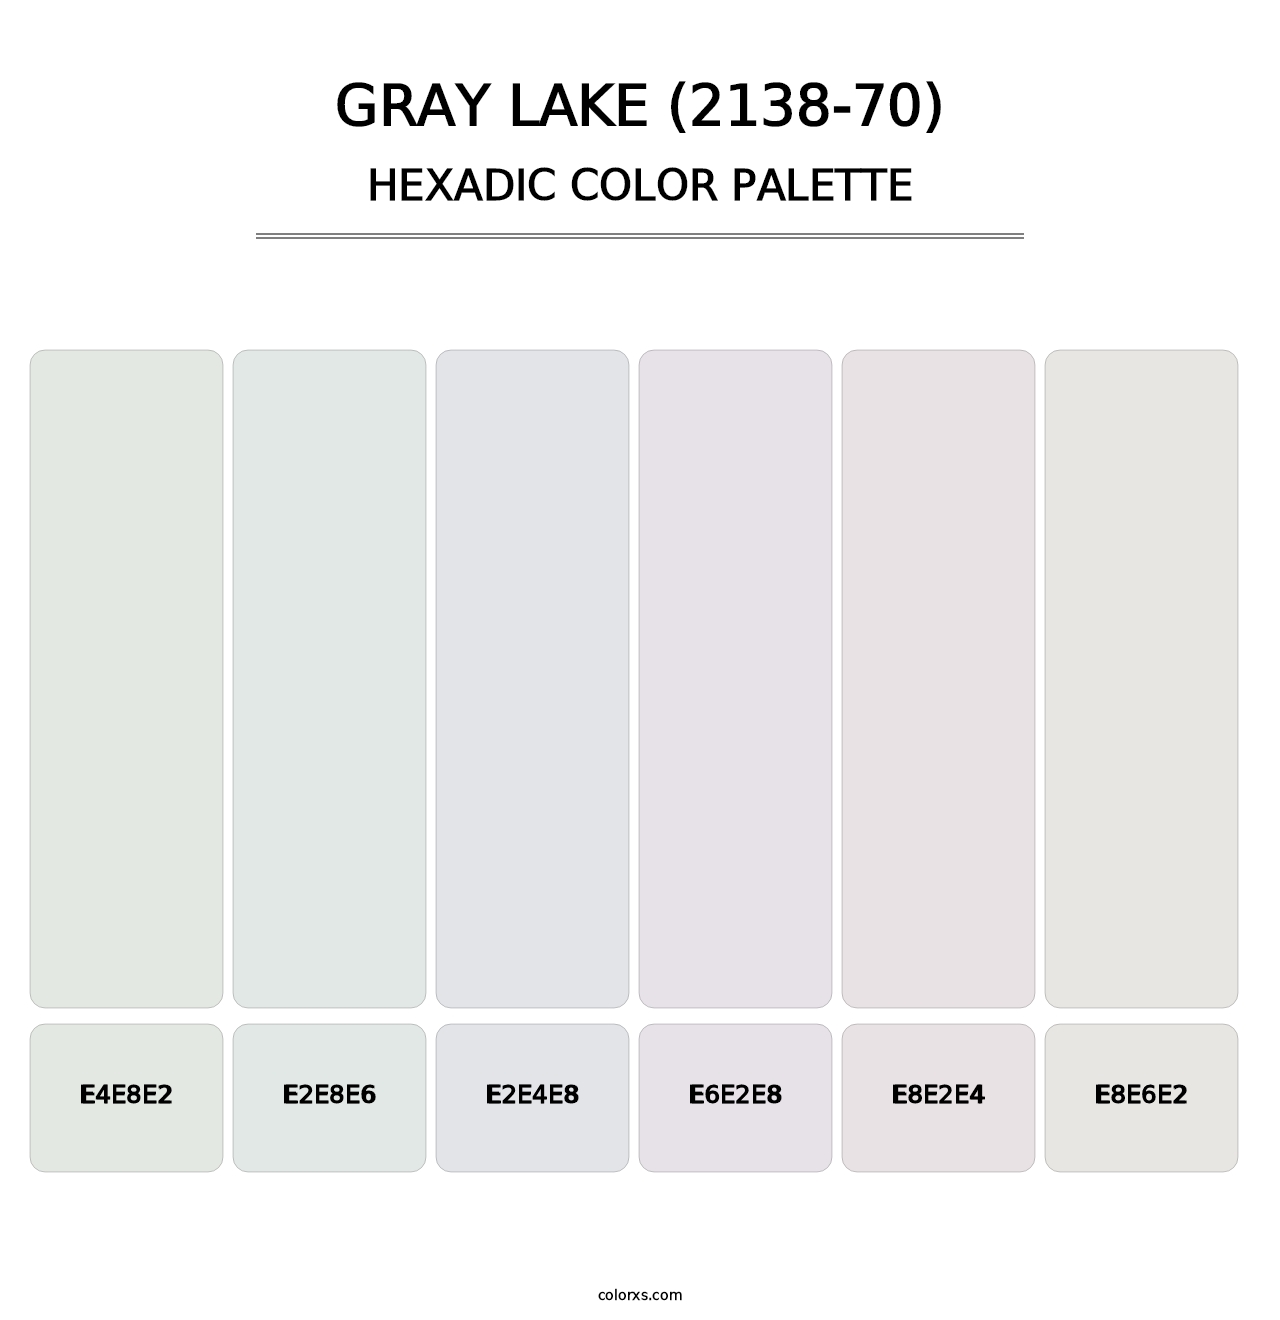 Gray Lake (2138-70) - Hexadic Color Palette